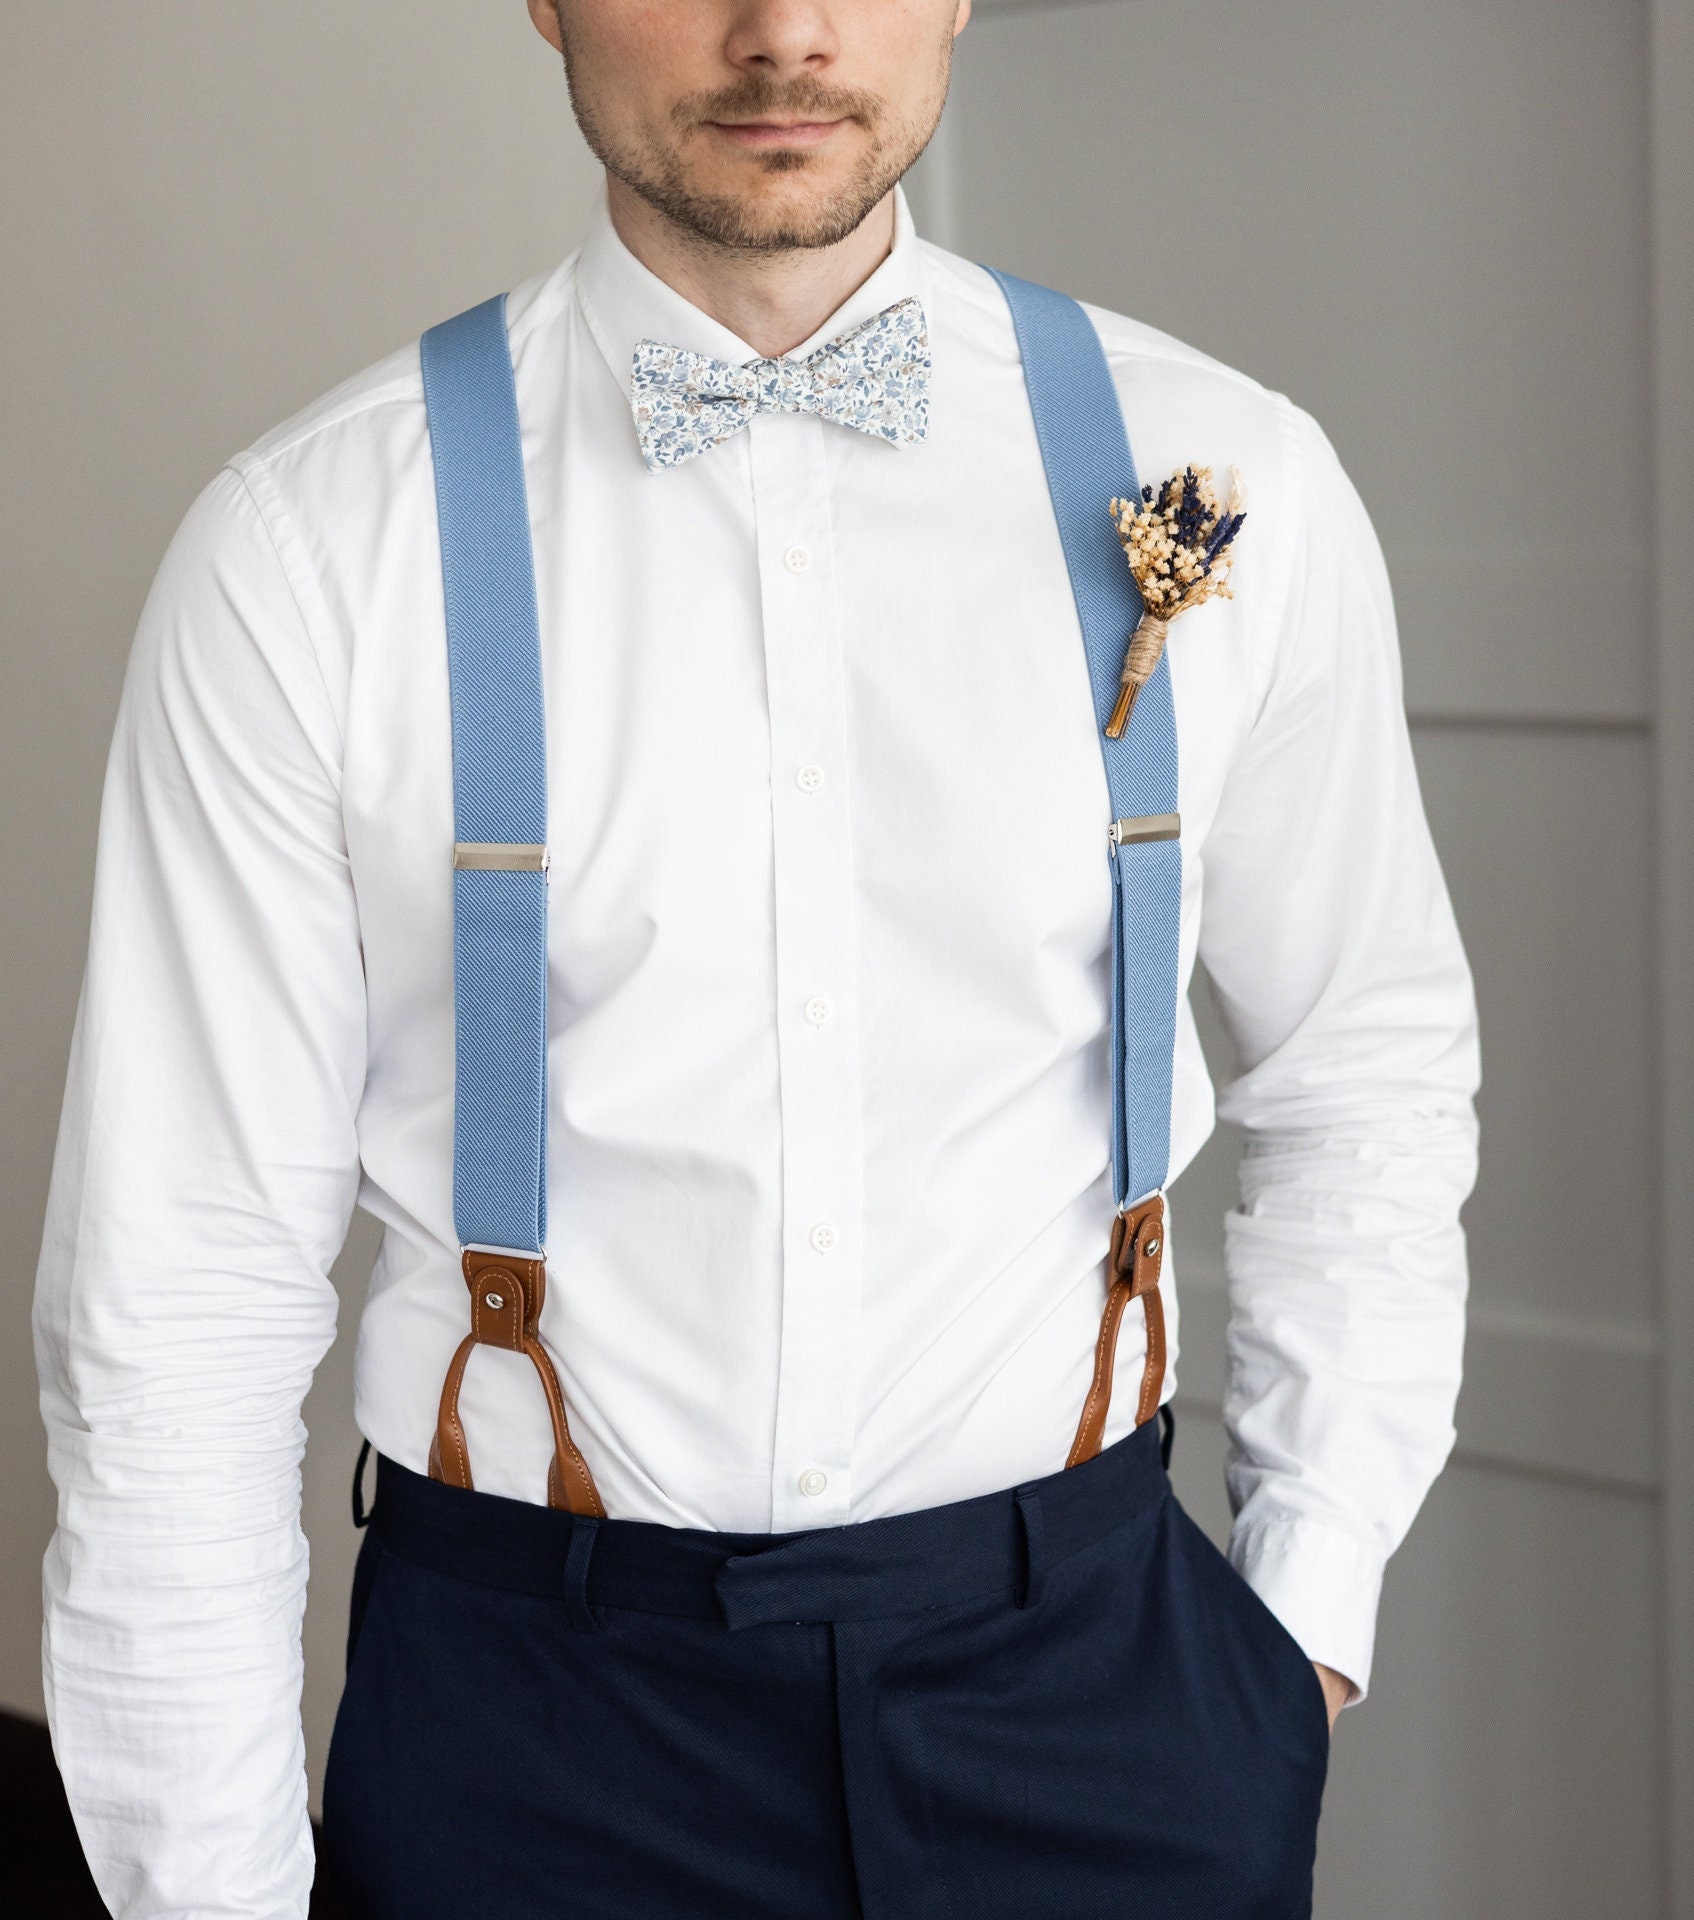 Light Blue Suspenders for Men, Brown Leather Button Tab Suspenders, Wedding  Suspenders for Groom Groomsmen, Clip on Braces 